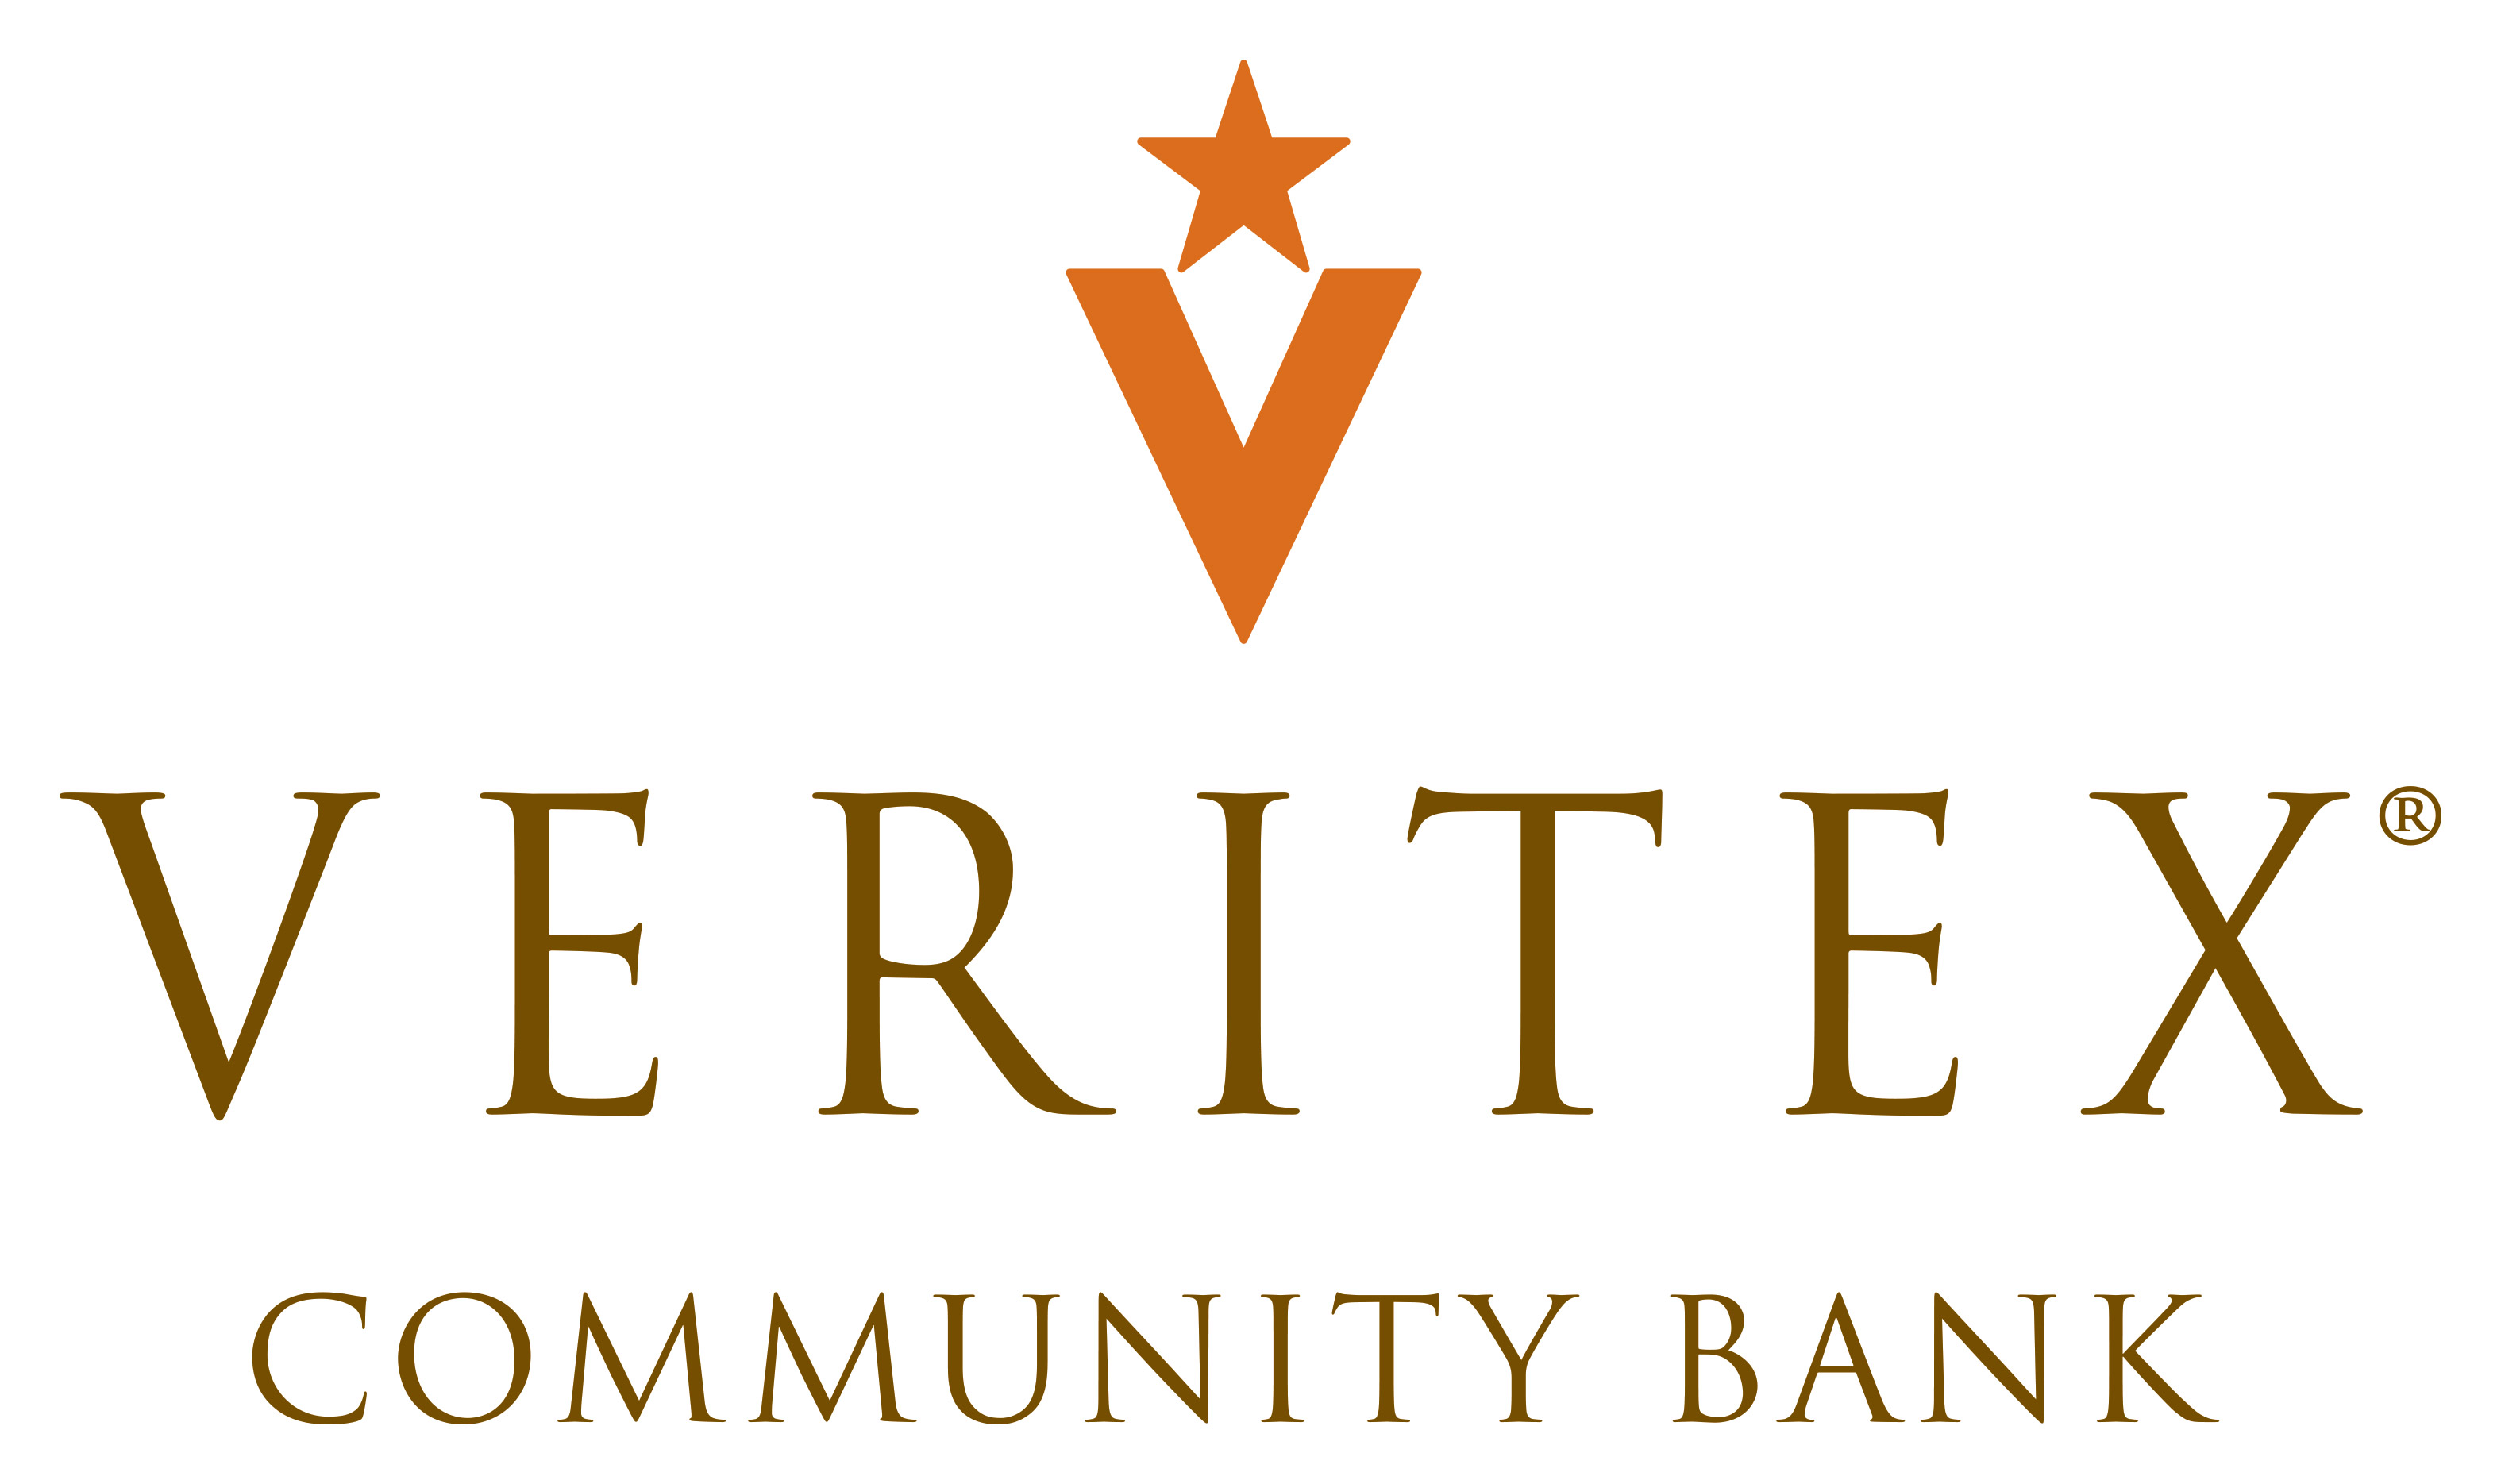 Veritex Community Bank